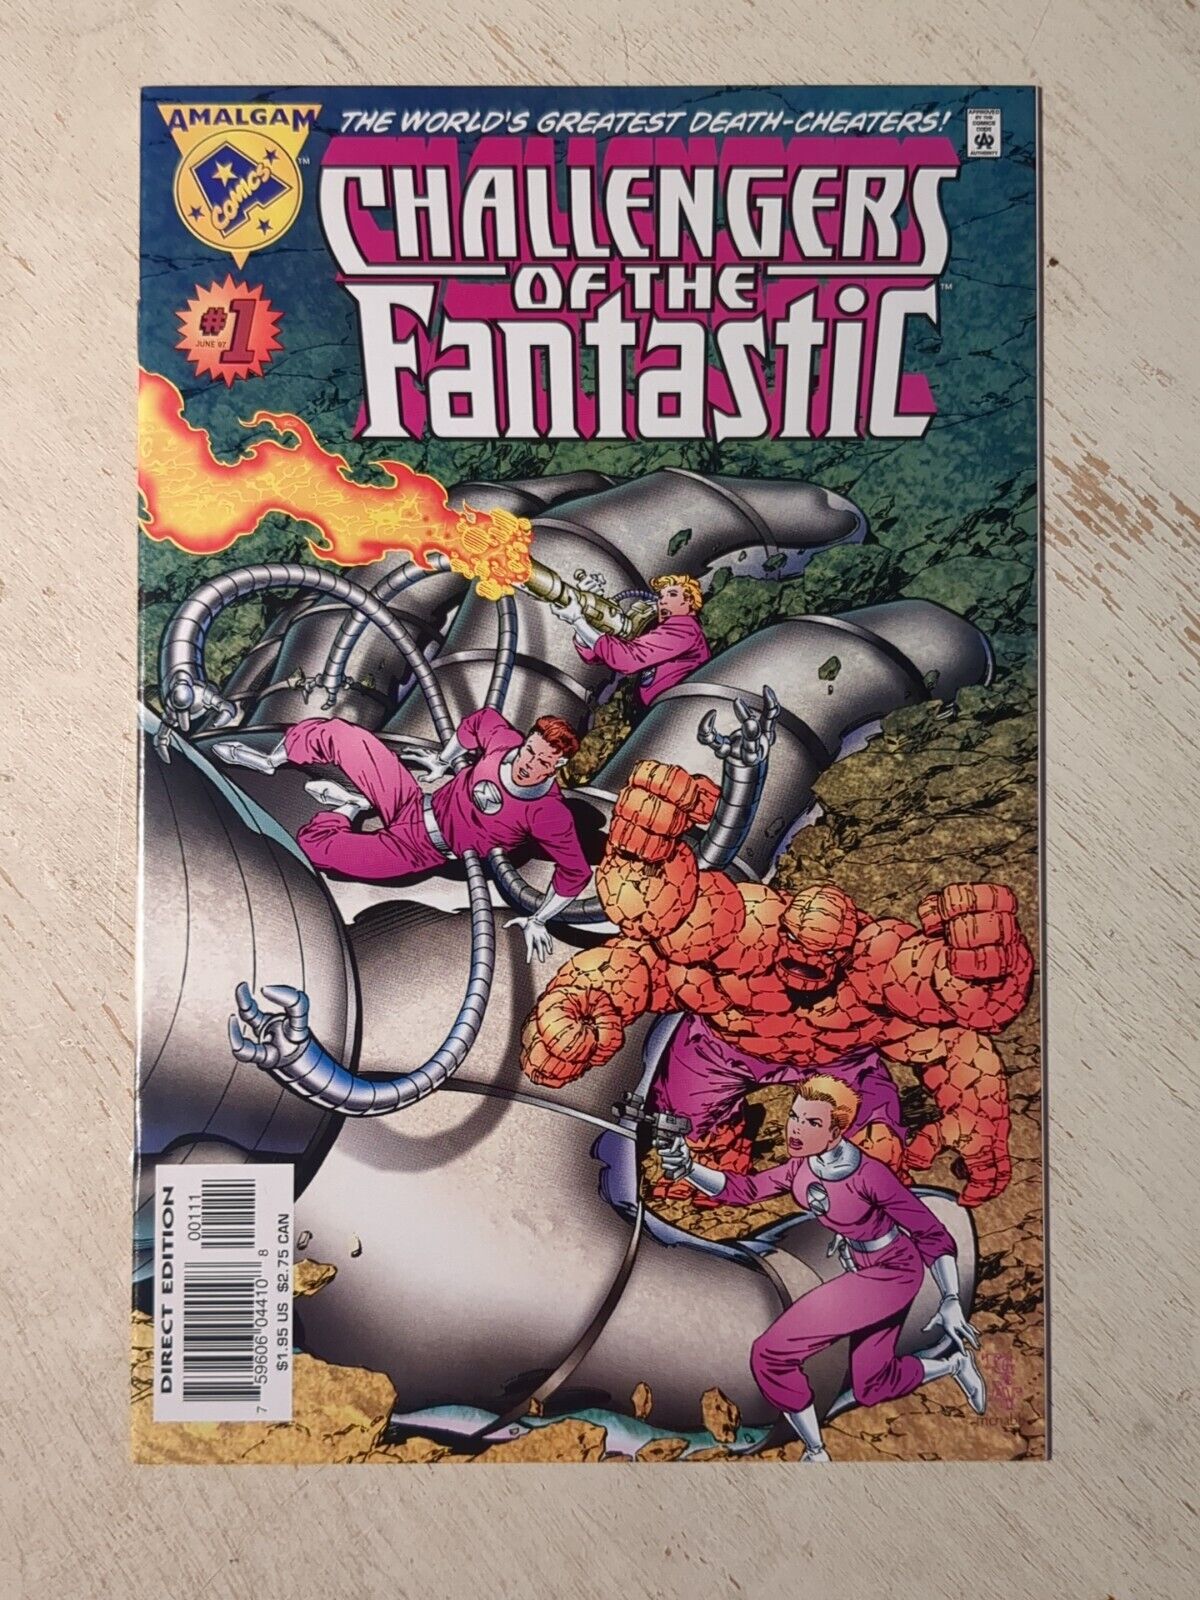 CHALLENGERS OF THE FANTASTIC #1 Fantastic Four Amalgam Comics SHIPS FREE 